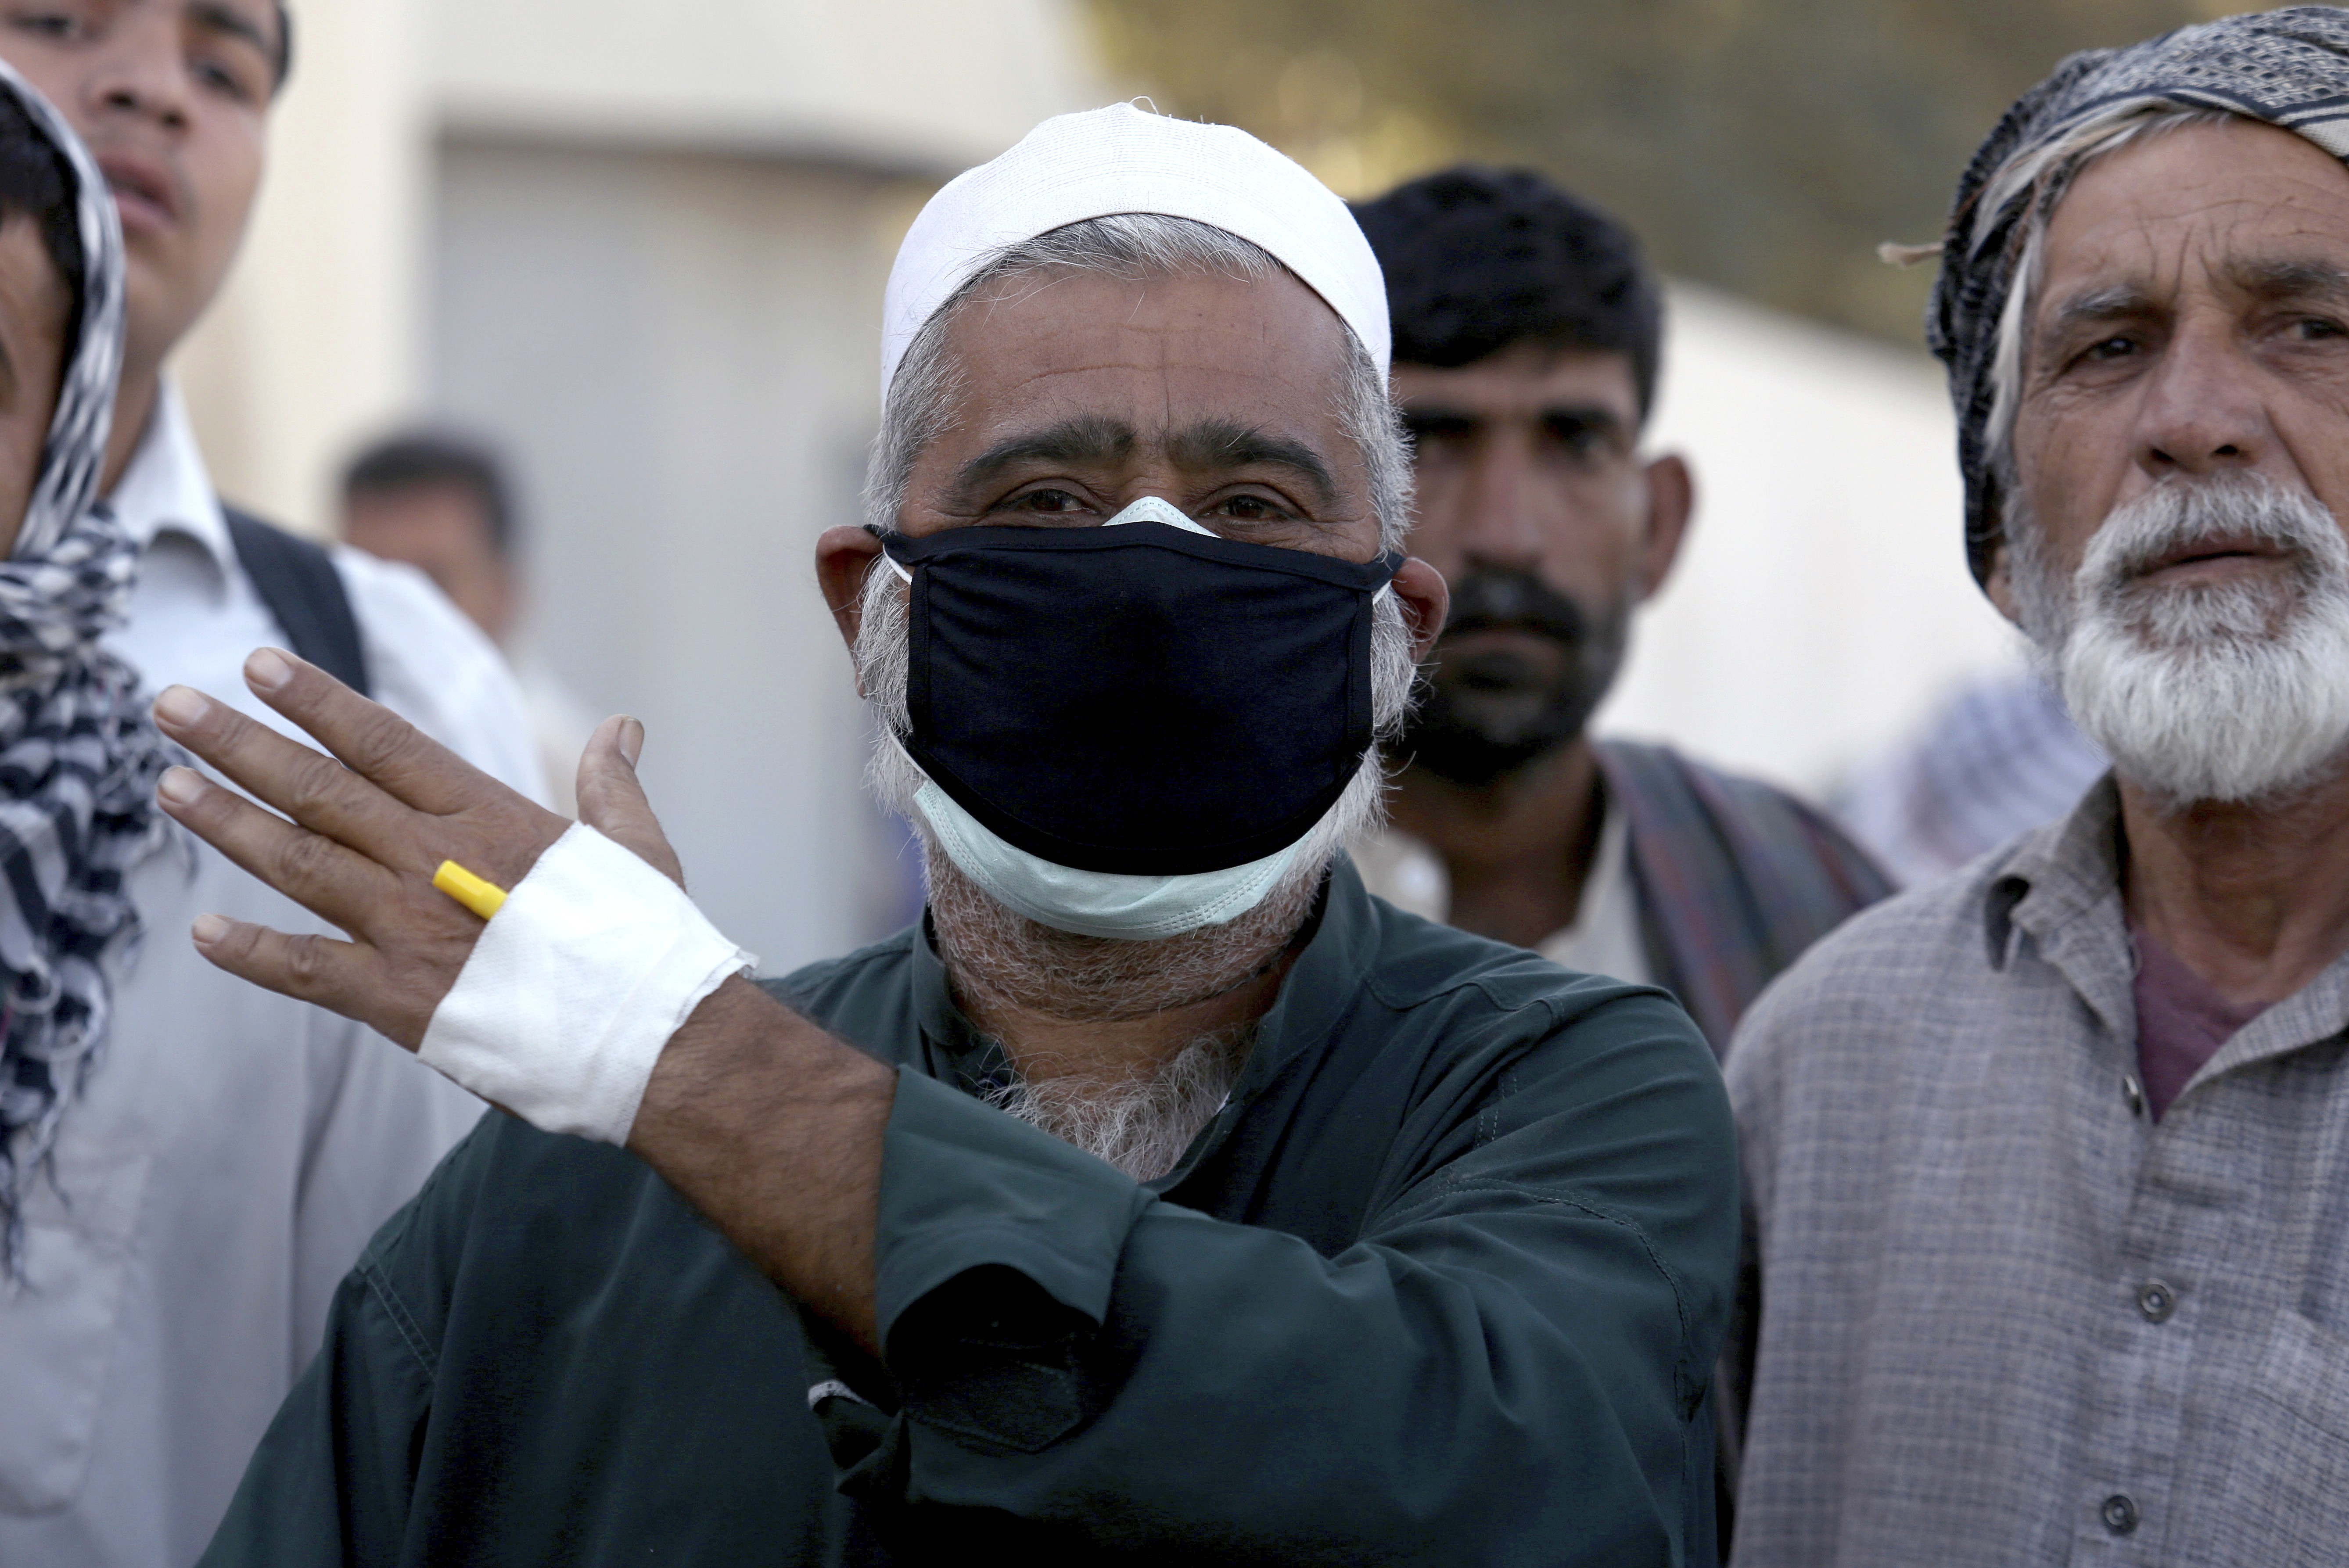 Keamari resident Sher Bahadur talks to media outside a hospital after receiving initial treatment following the toxic gas leak. Photo: AP